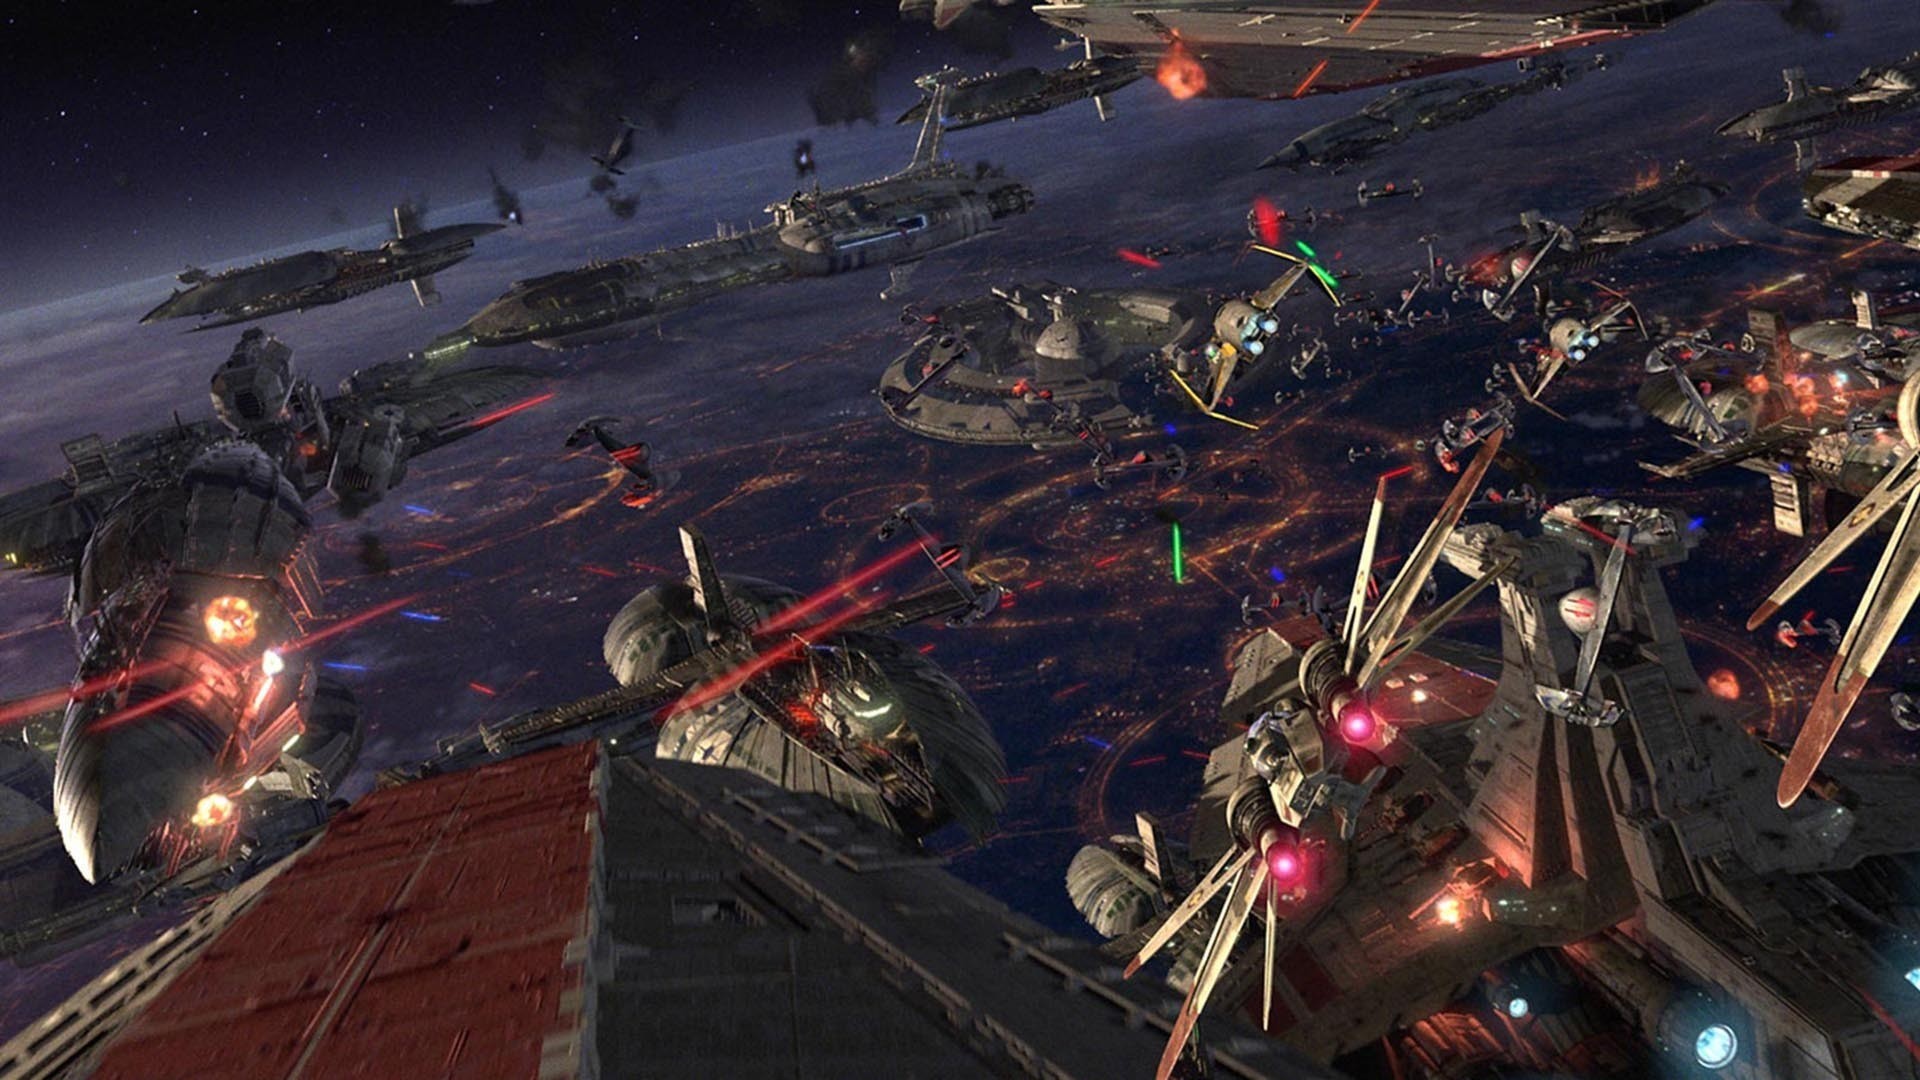 Star Wars Space Battle Wallpaper (61+ images)